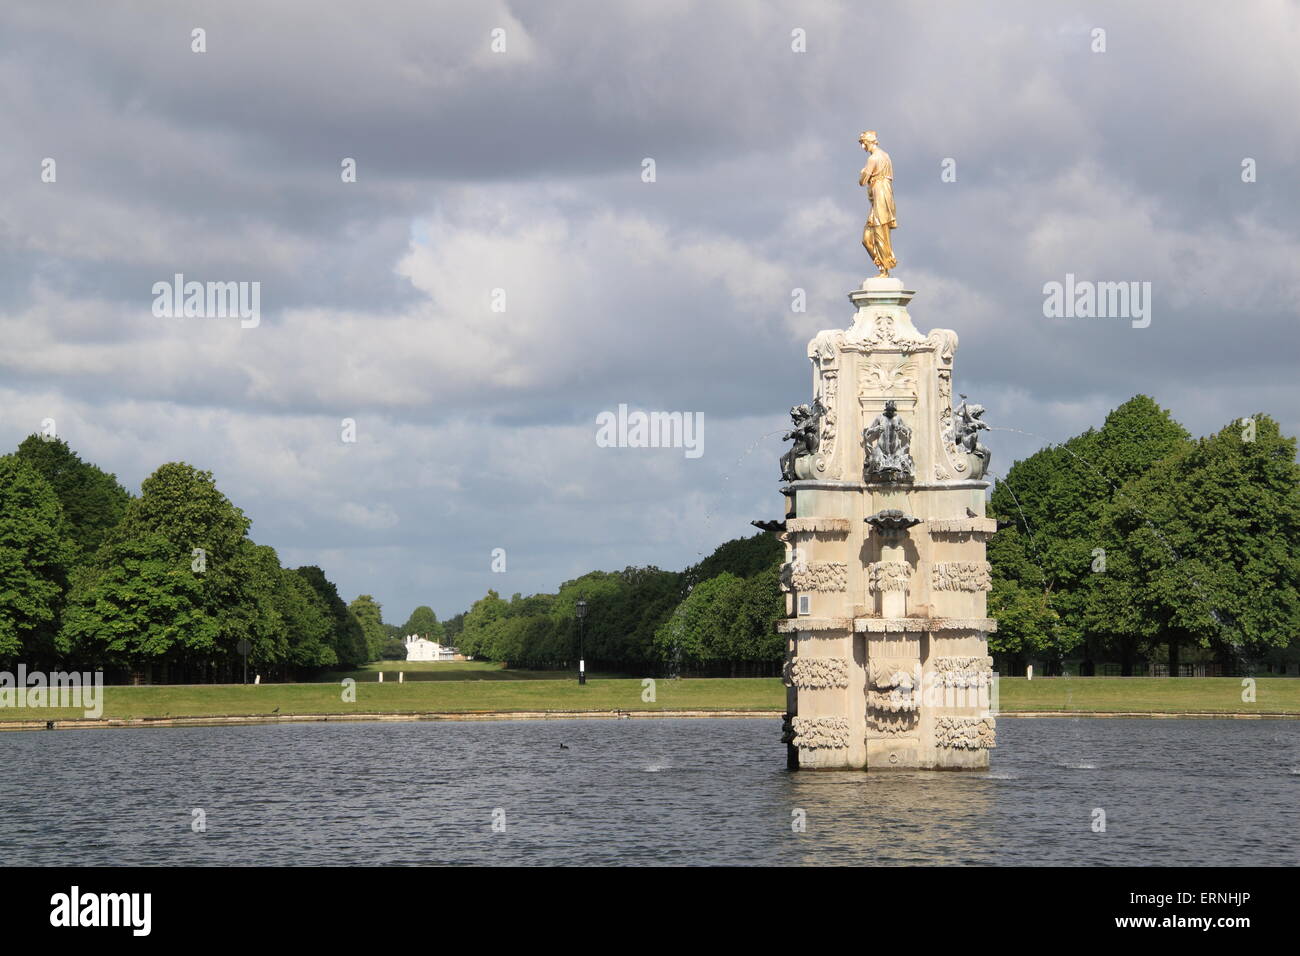 Diana Fountain, Bushy Park, Hampton court, Grand Londres, Angleterre, Grande-Bretagne, Royaume-Uni, Royaume-Uni, Europe Banque D'Images